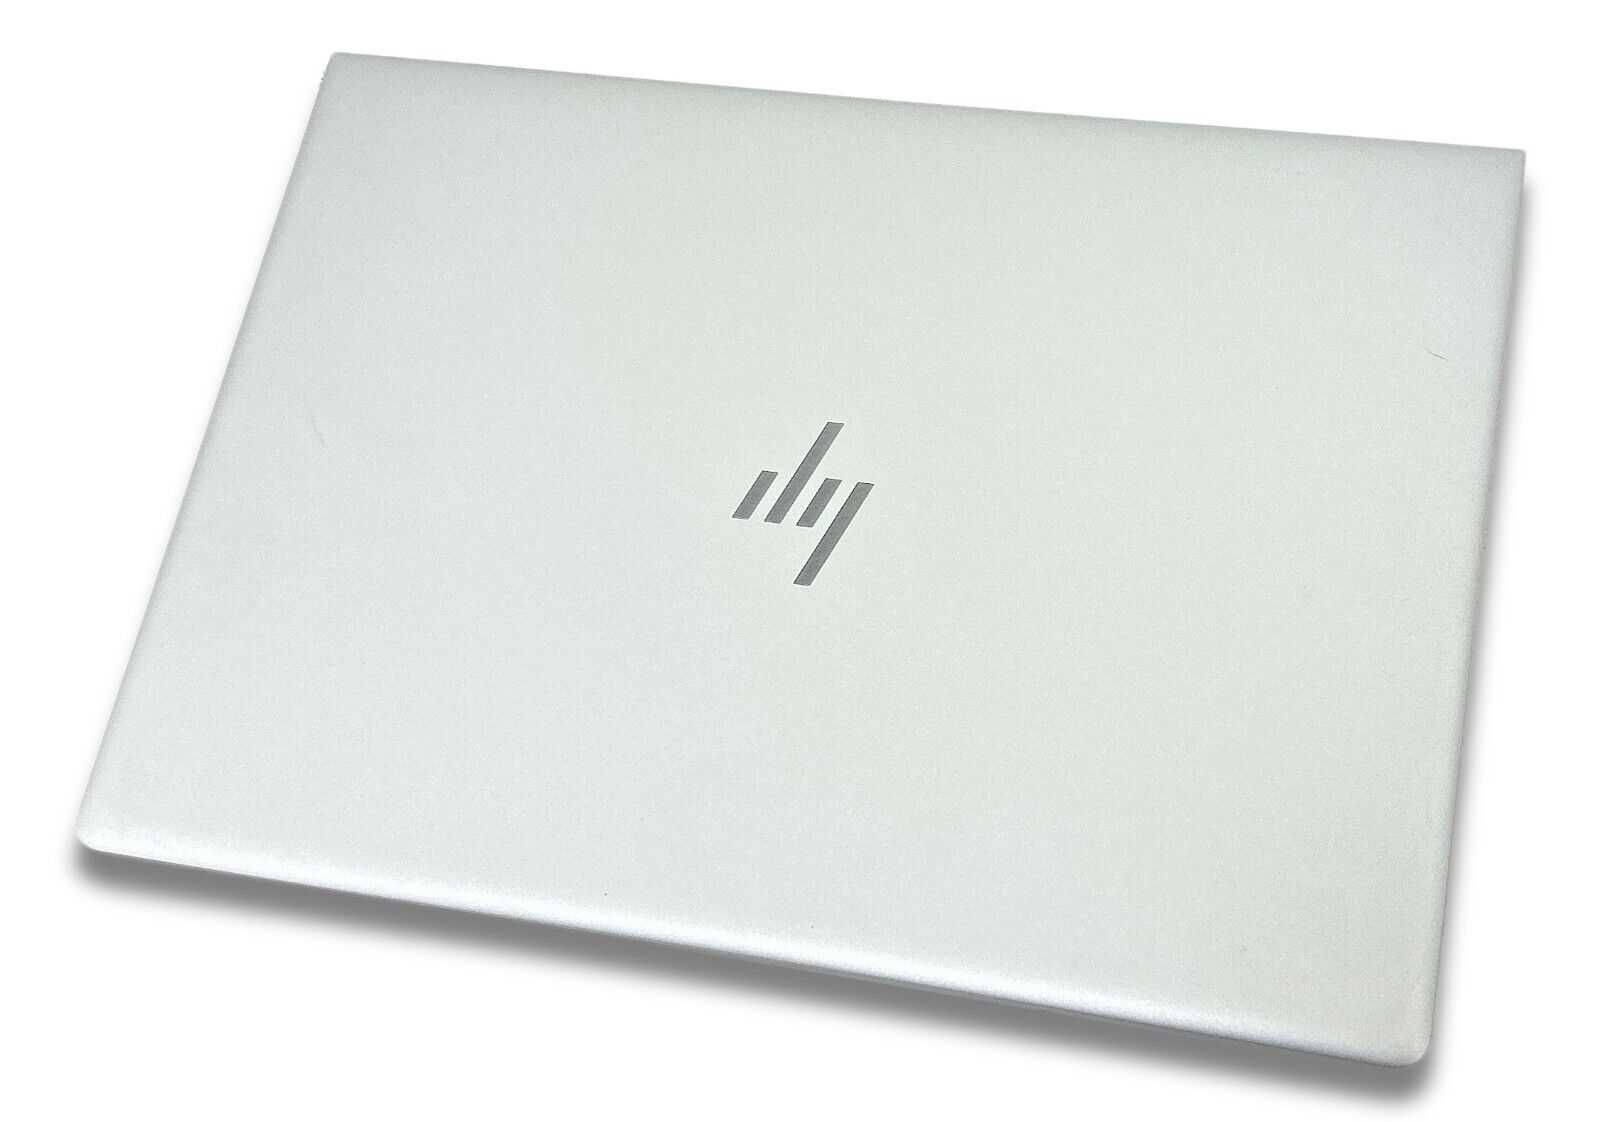 Laptop HP Elitebook, Core i5, SSD 256GB, 8GB, FHD 1920p, Win11 Pro